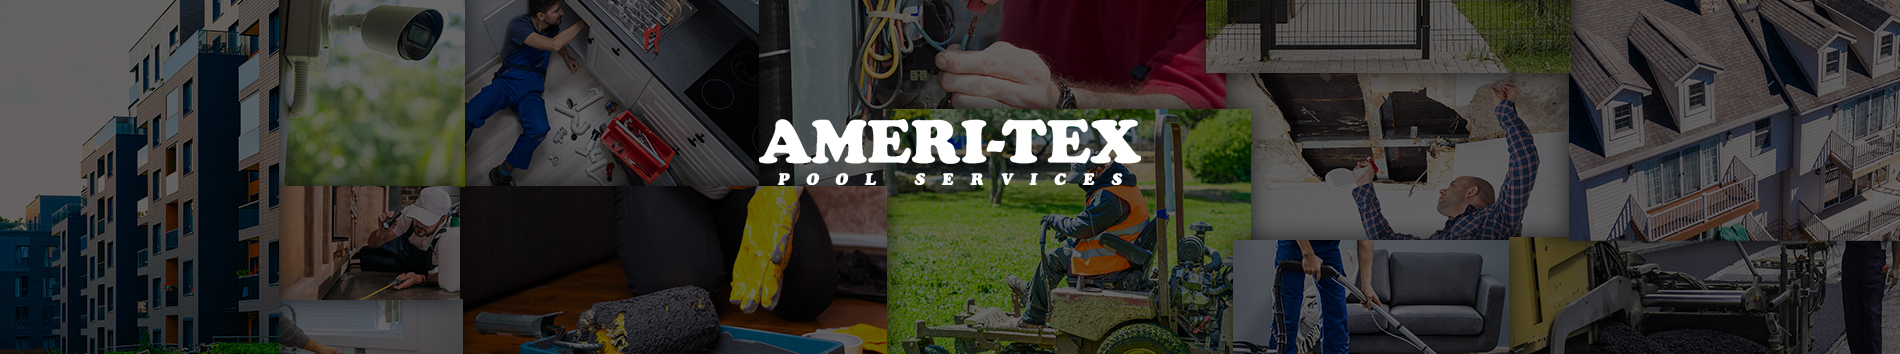 Ameri-Tex Pool Services